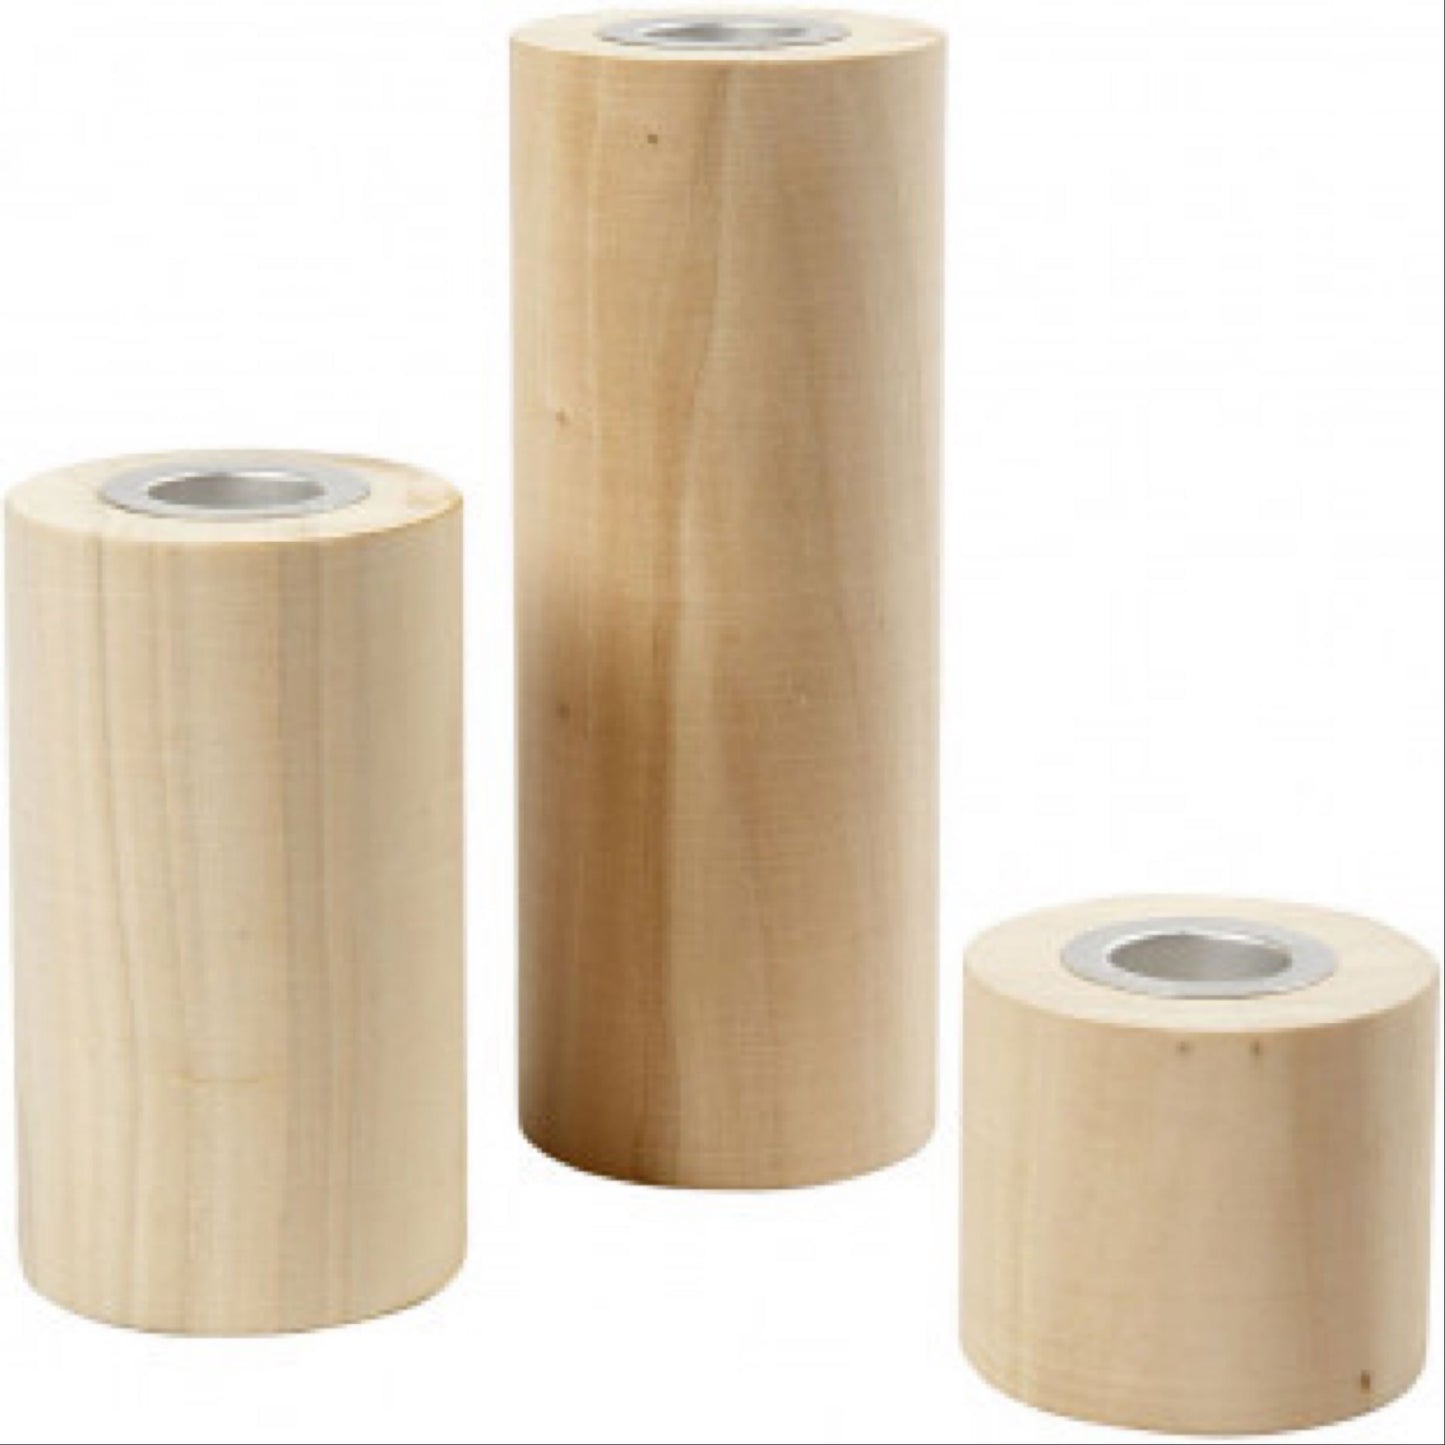 Lysestaker runde sylindere , H: 14.5+9+6.5 cm, hole size 2.3 cm, poplar wood, 3pcs